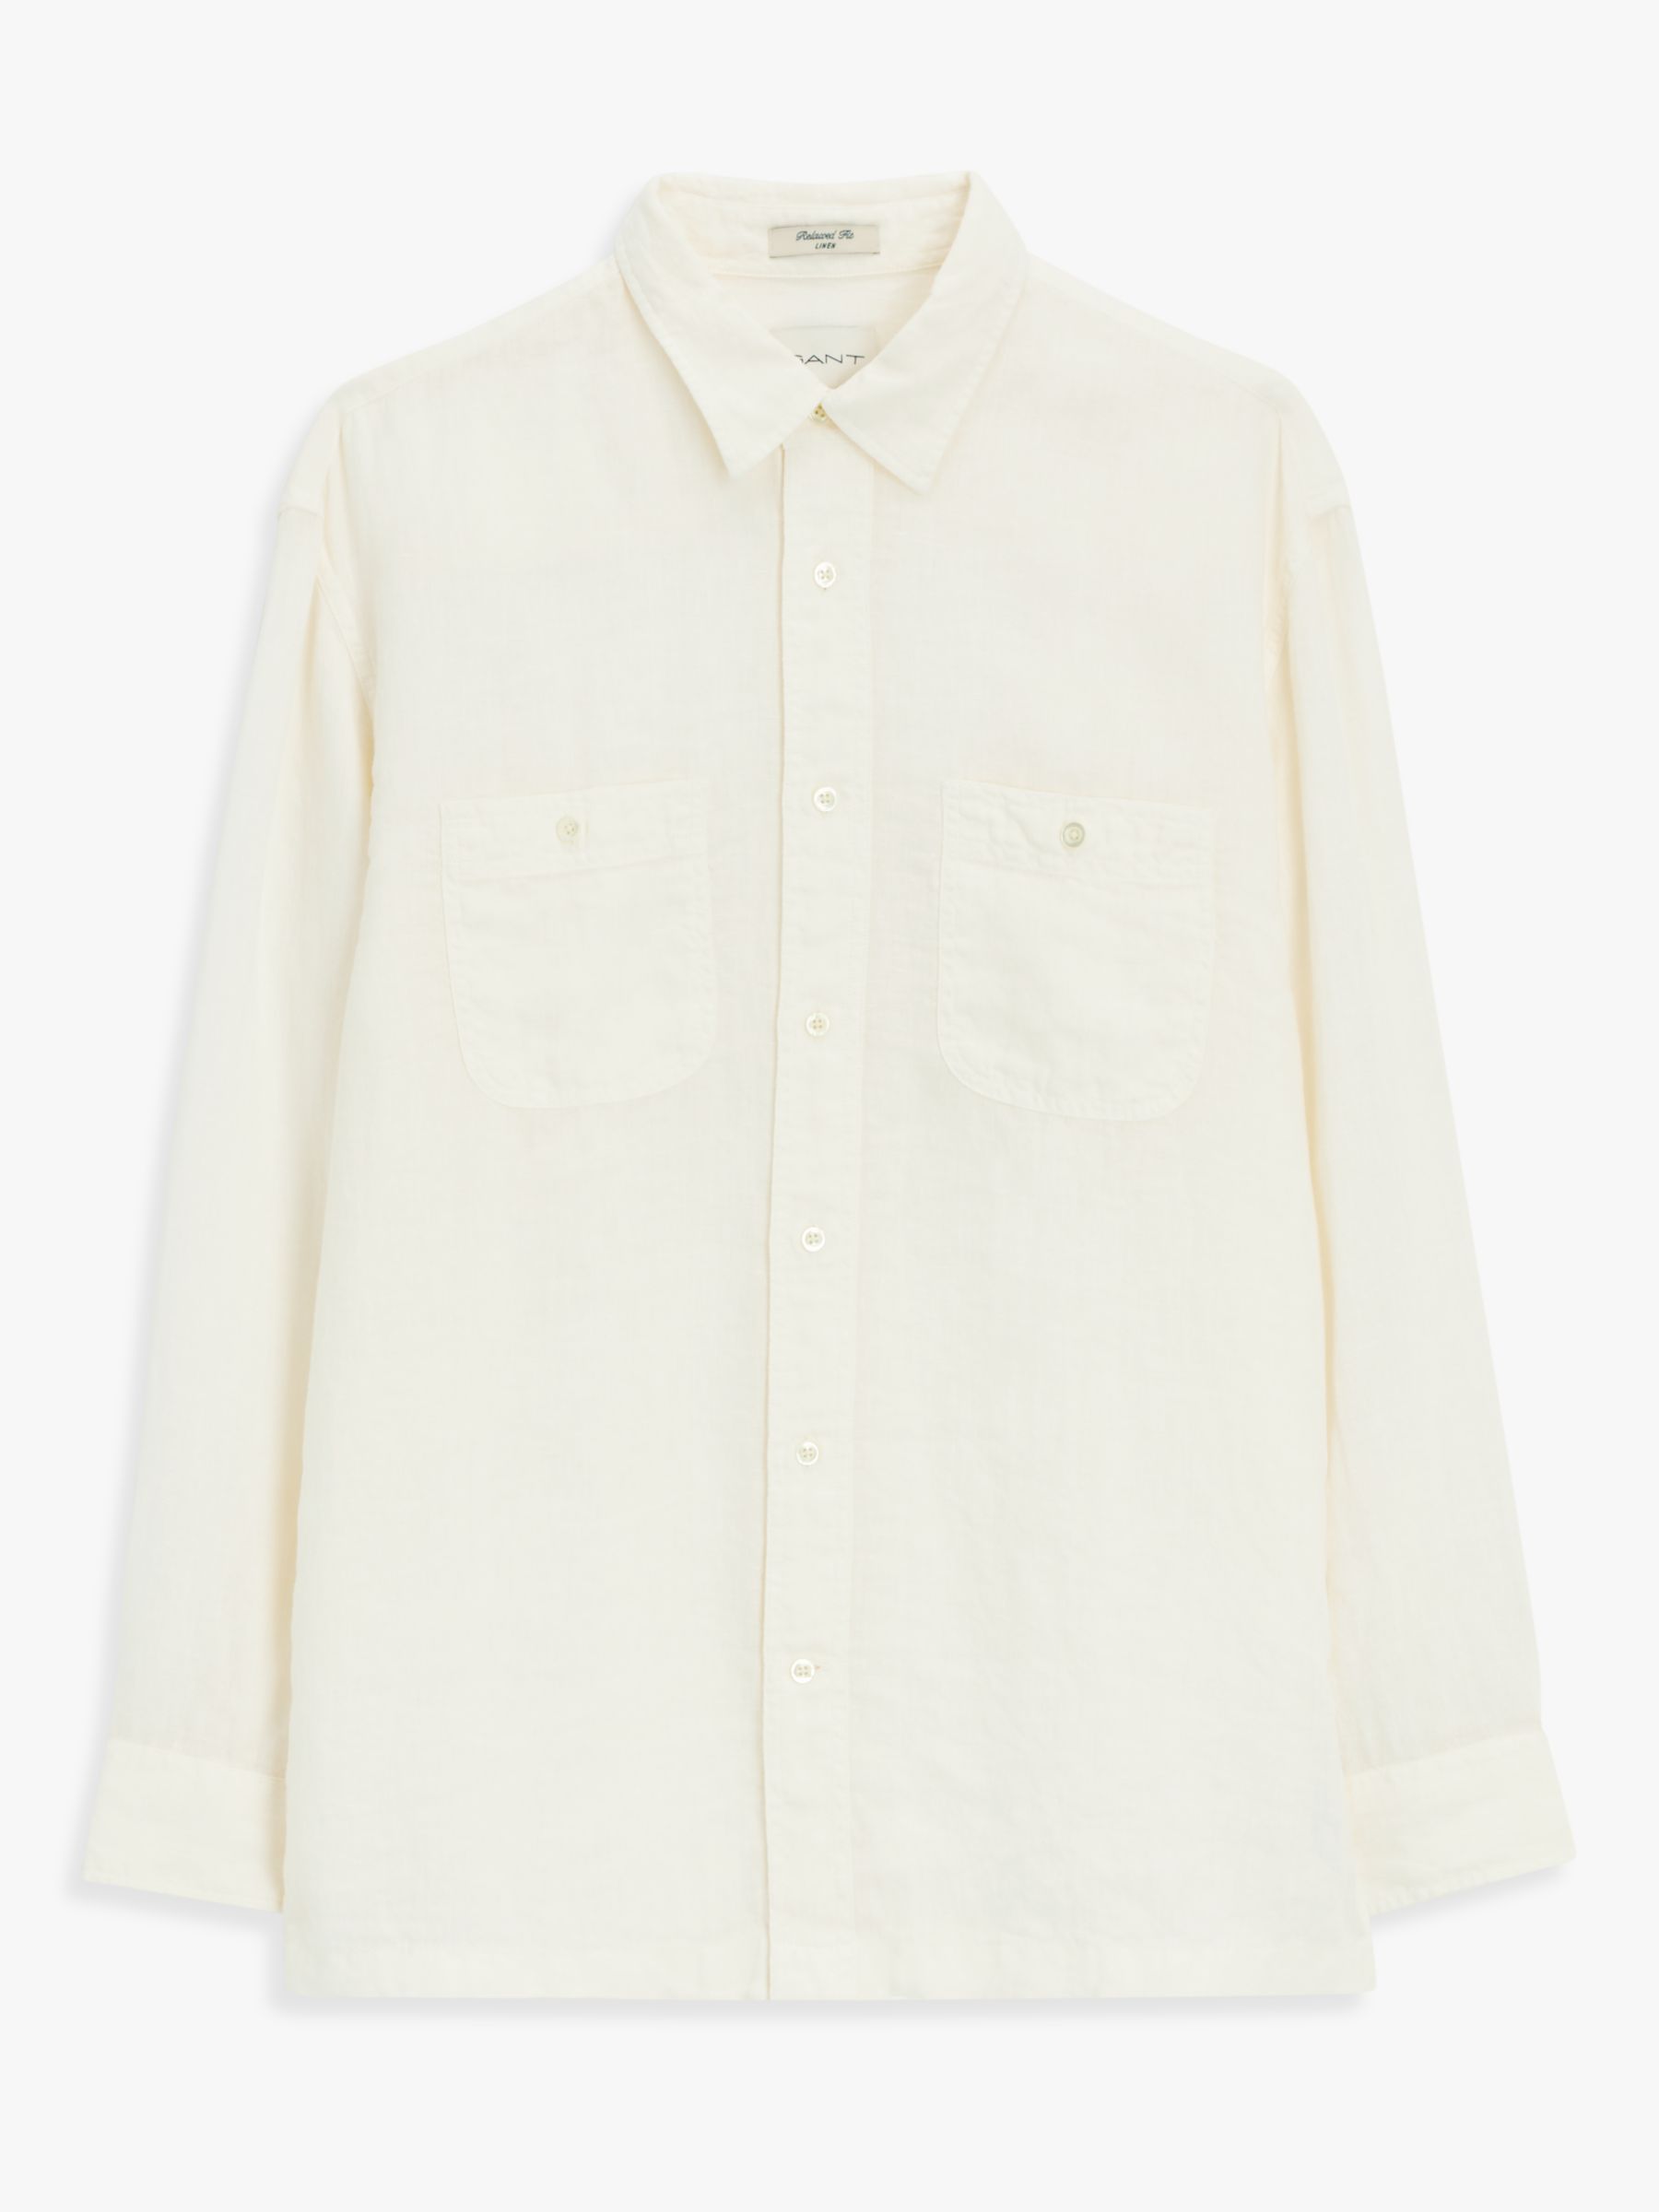 GANT Garment Dyed Linen Shirt, Cream at John Lewis & Partners